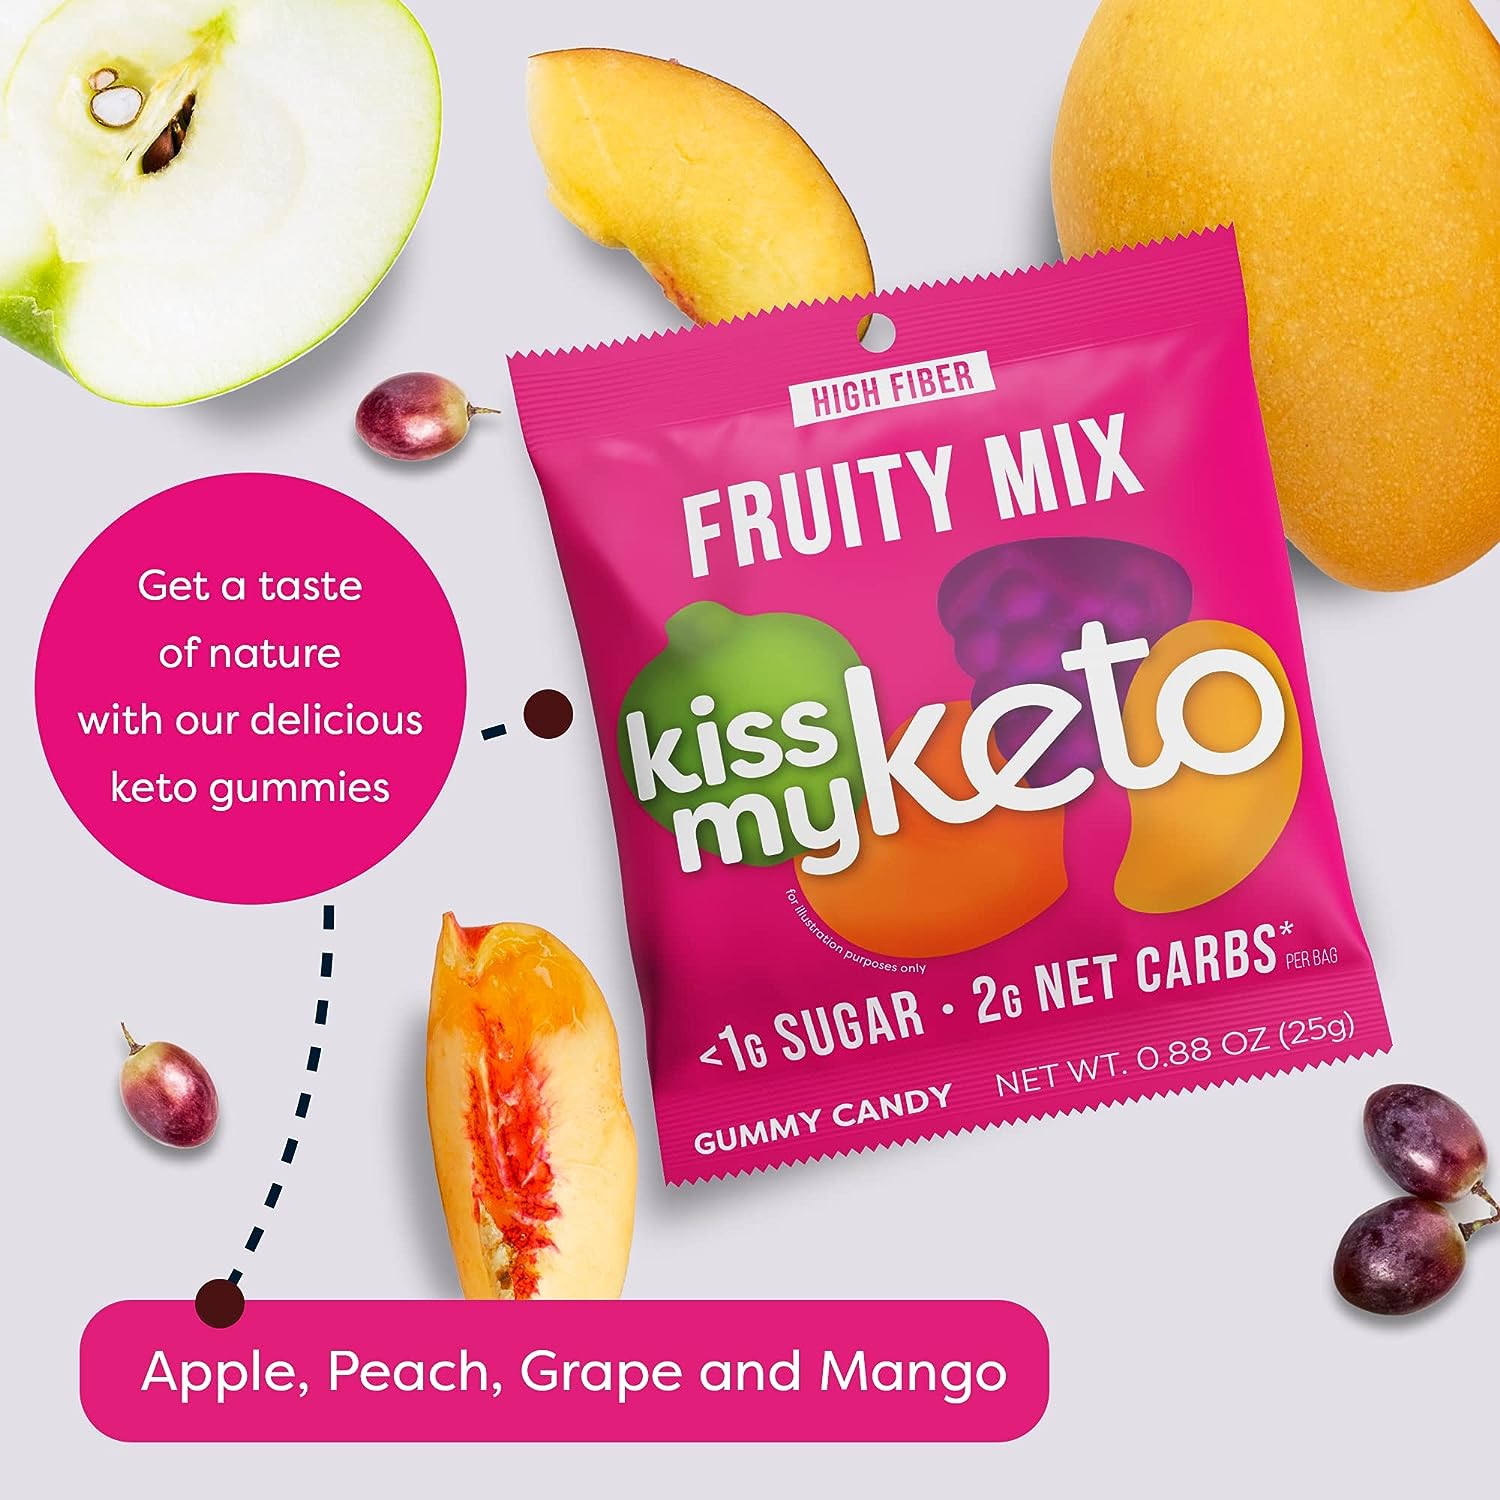 Kiss my Keto Gummies (1 bag) kiss-my-keto-gummies-1-bag Protein Snacks Fruity Mix KissMyKeto